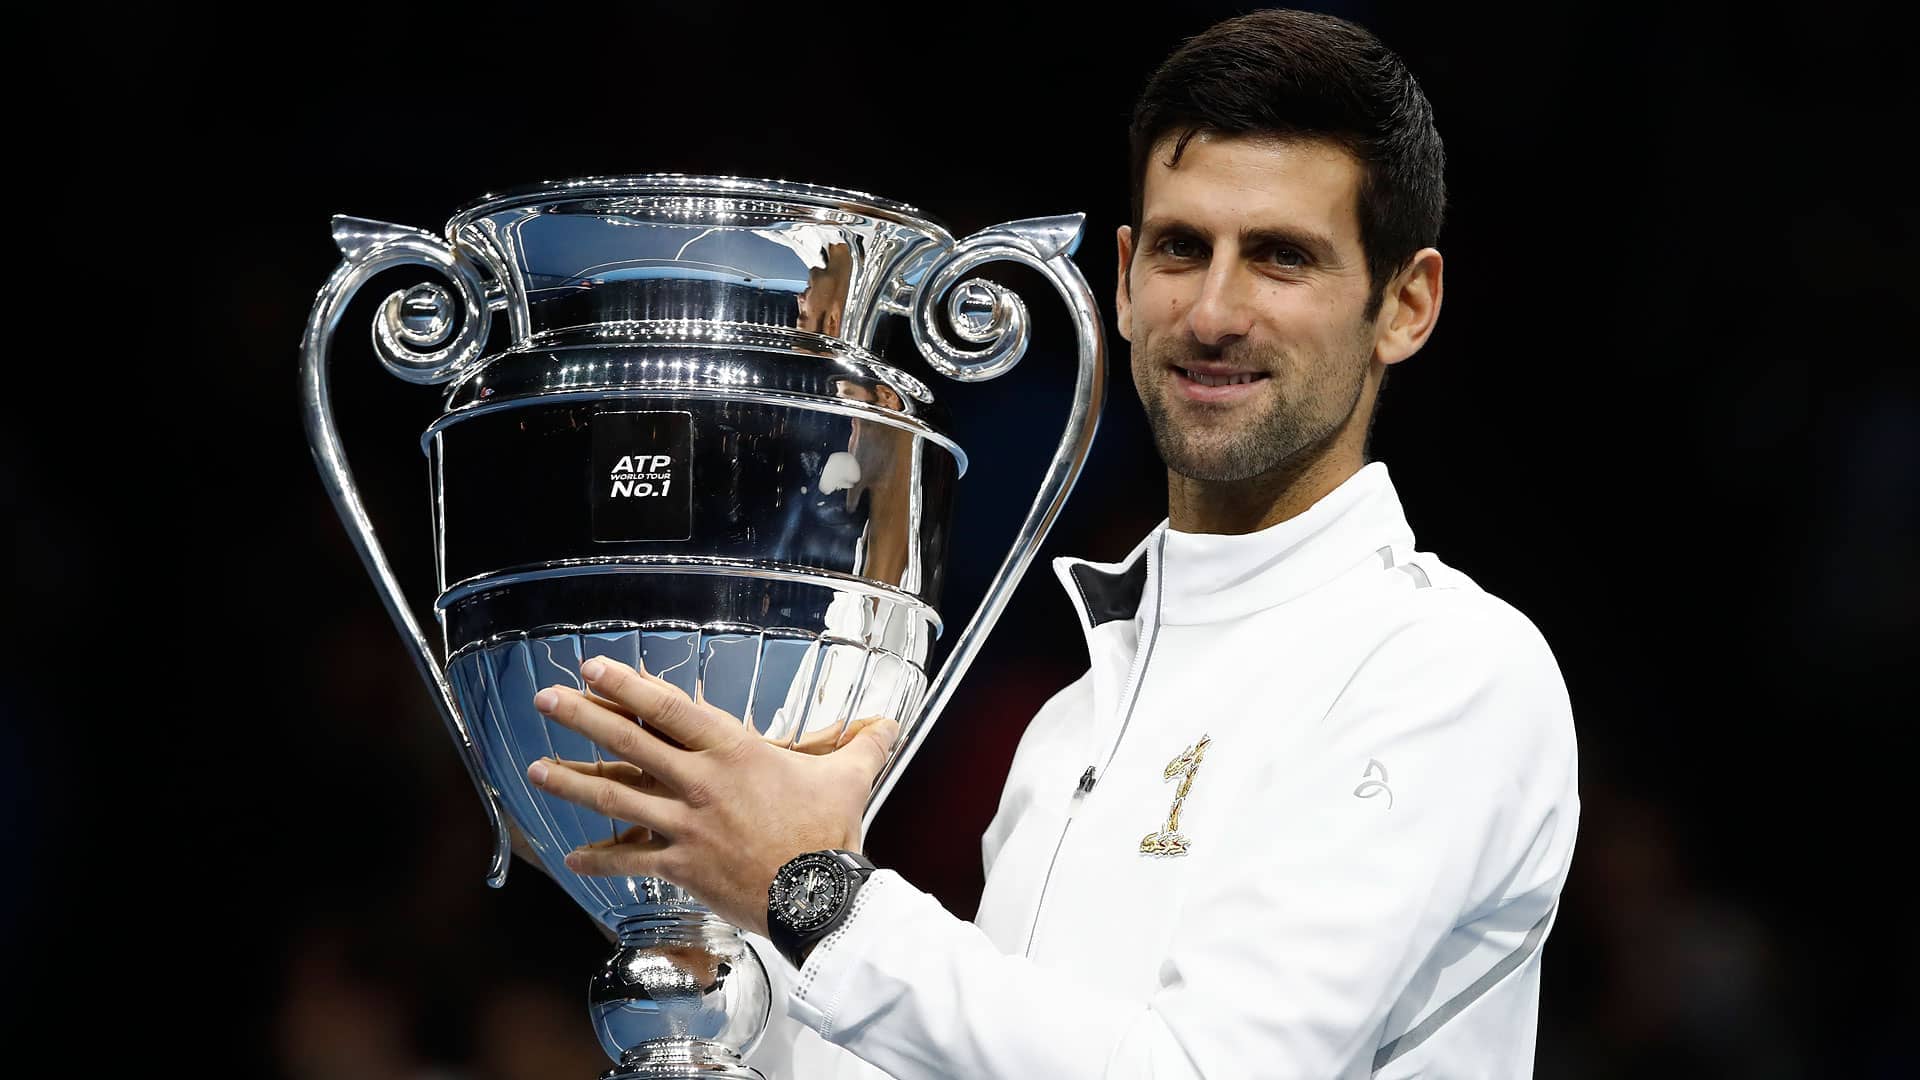 Djokovic Presented YearEnd ATP World Tour No. 1 Trophy At 2018 Nitto